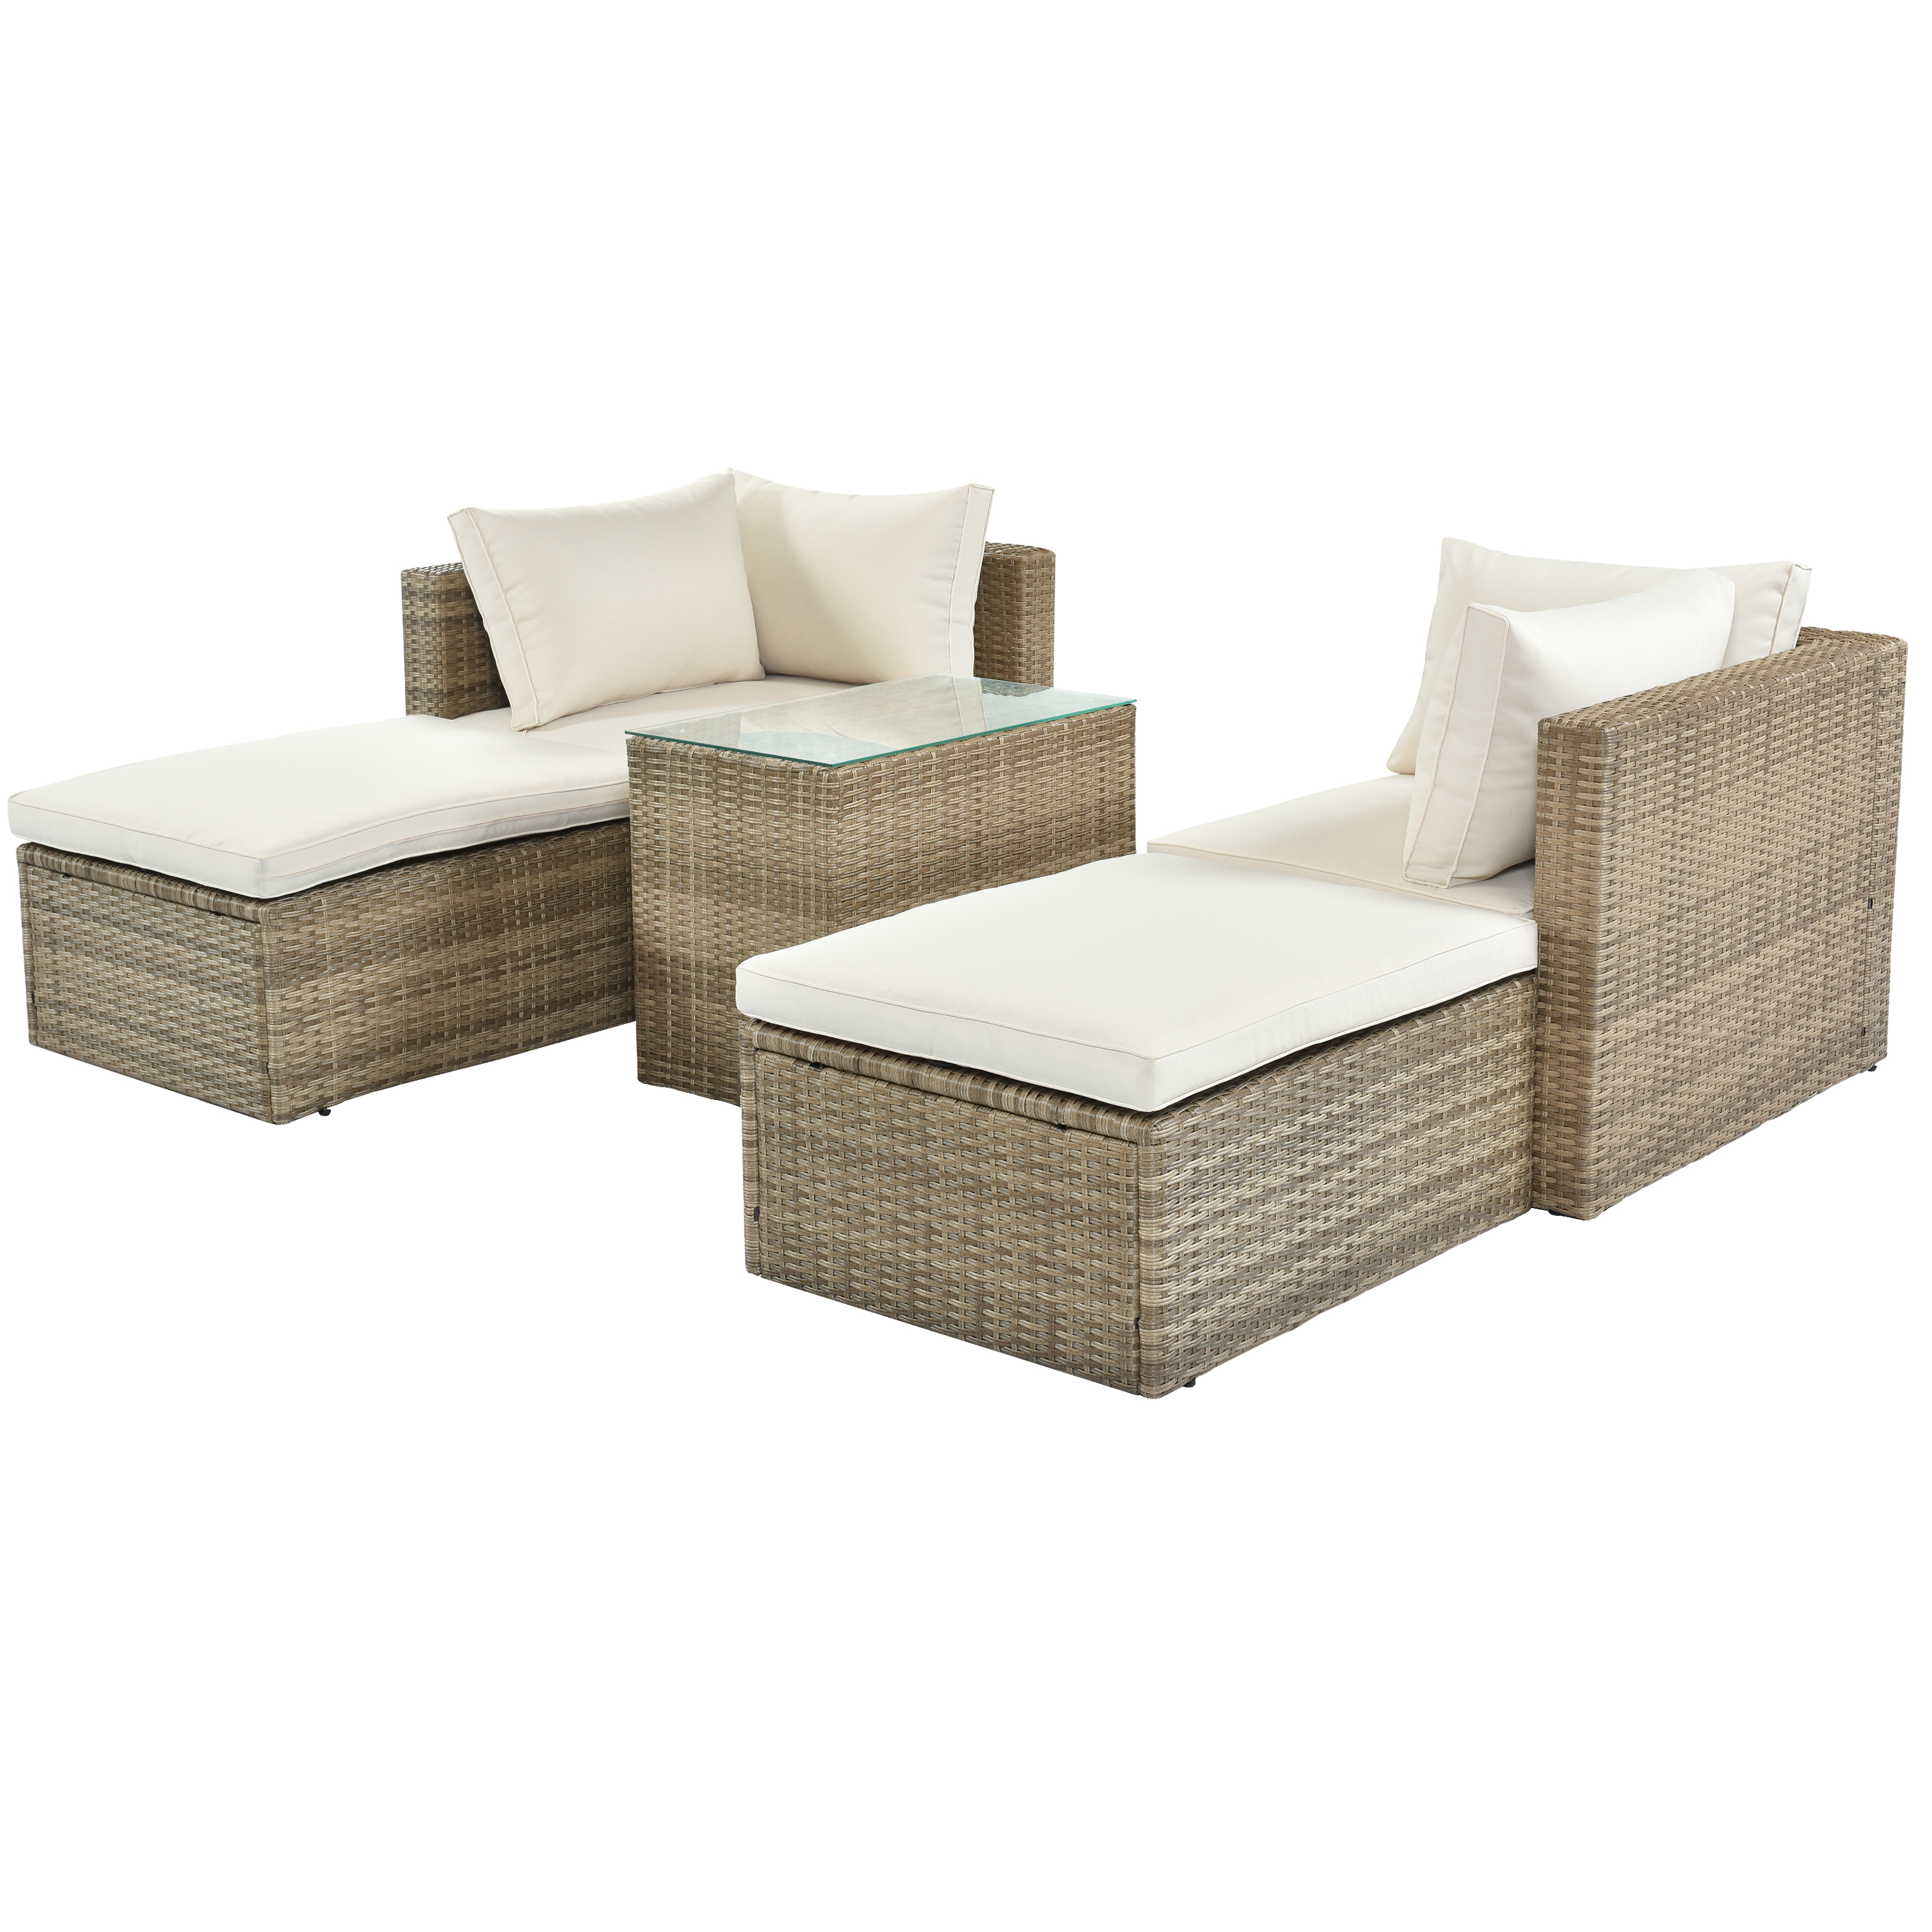  Outdoor Patio Furniture Set, 5-Piece Wicker Rattan Sectional Sofa Set, Brown and Beige-CASAINC